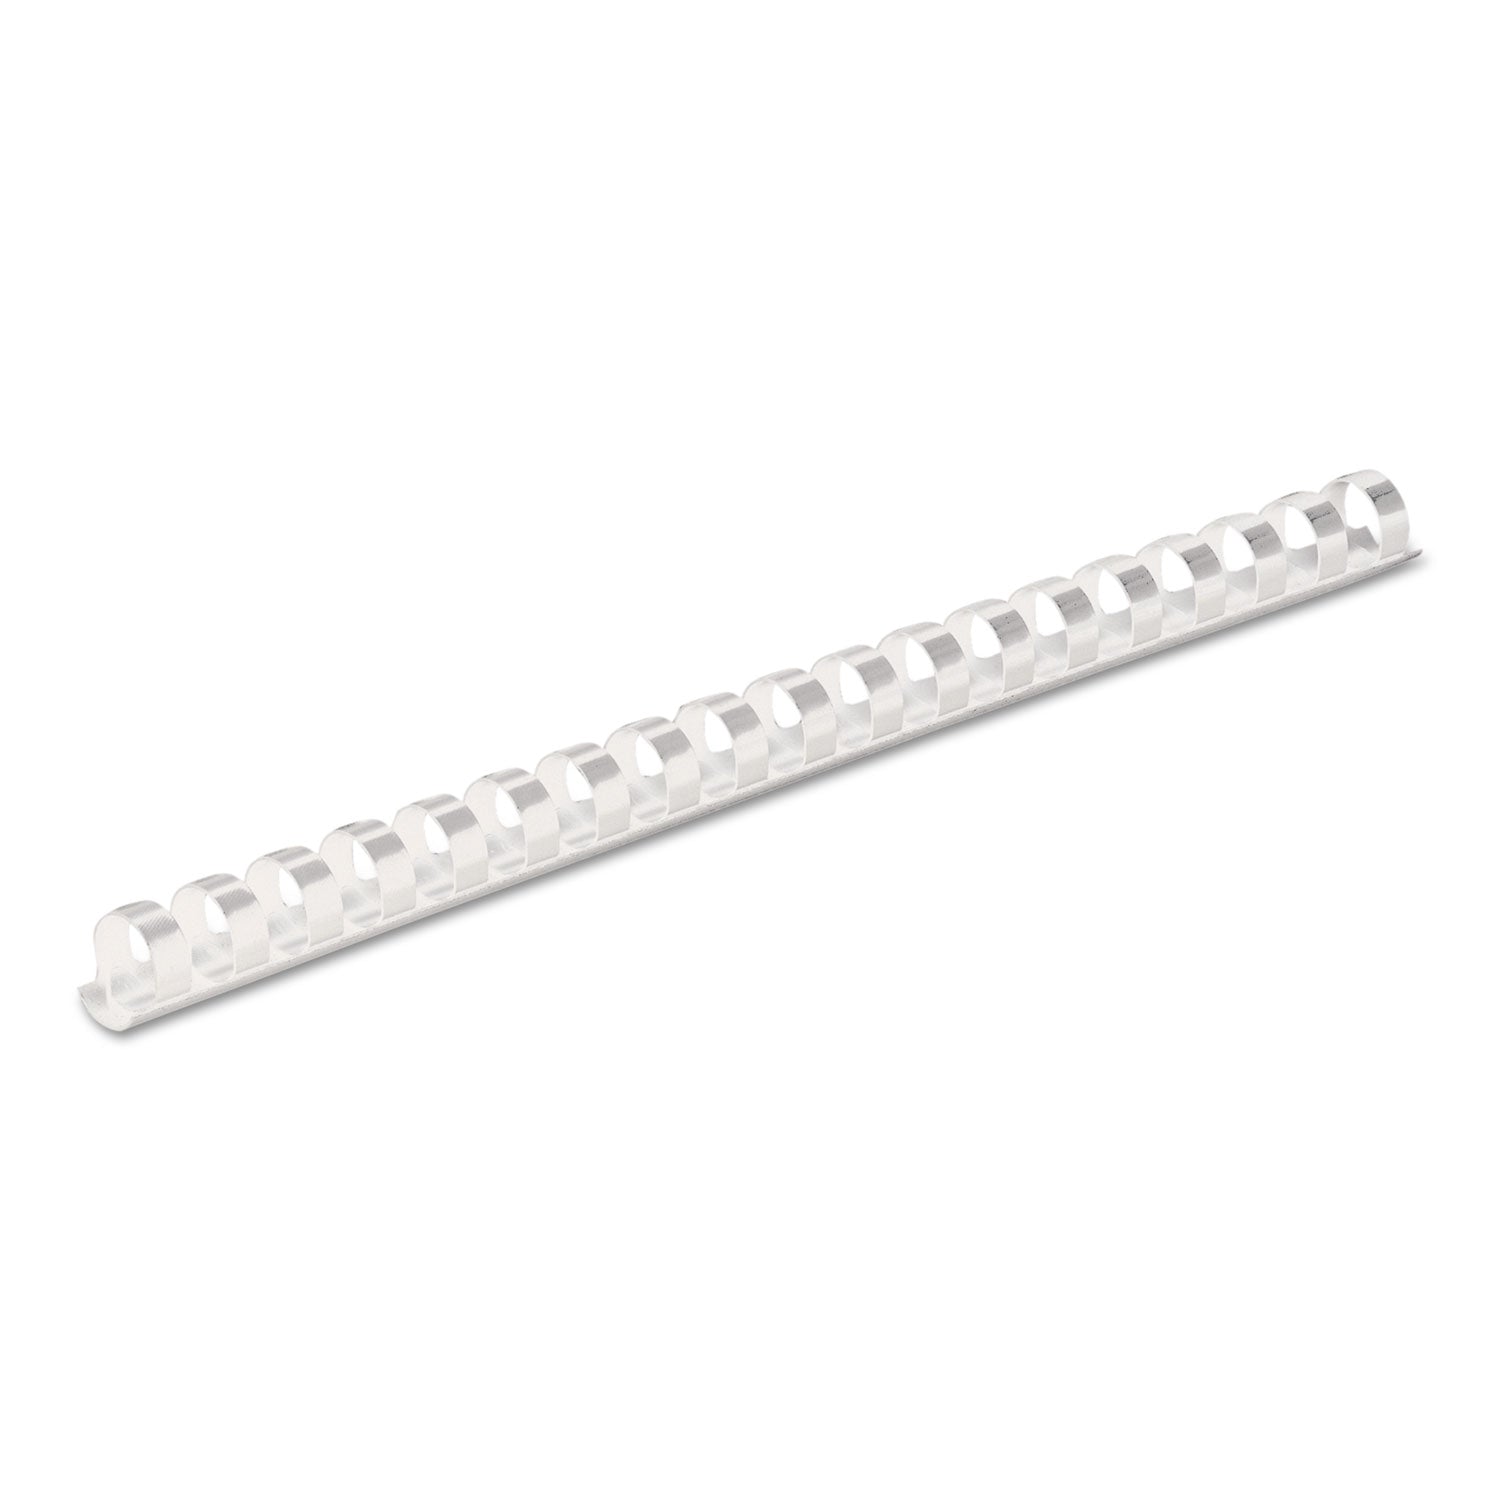 Plastic Comb Bindings, 1/2" Diameter, 90 Sheet Capacity, White, 100/Pack - 